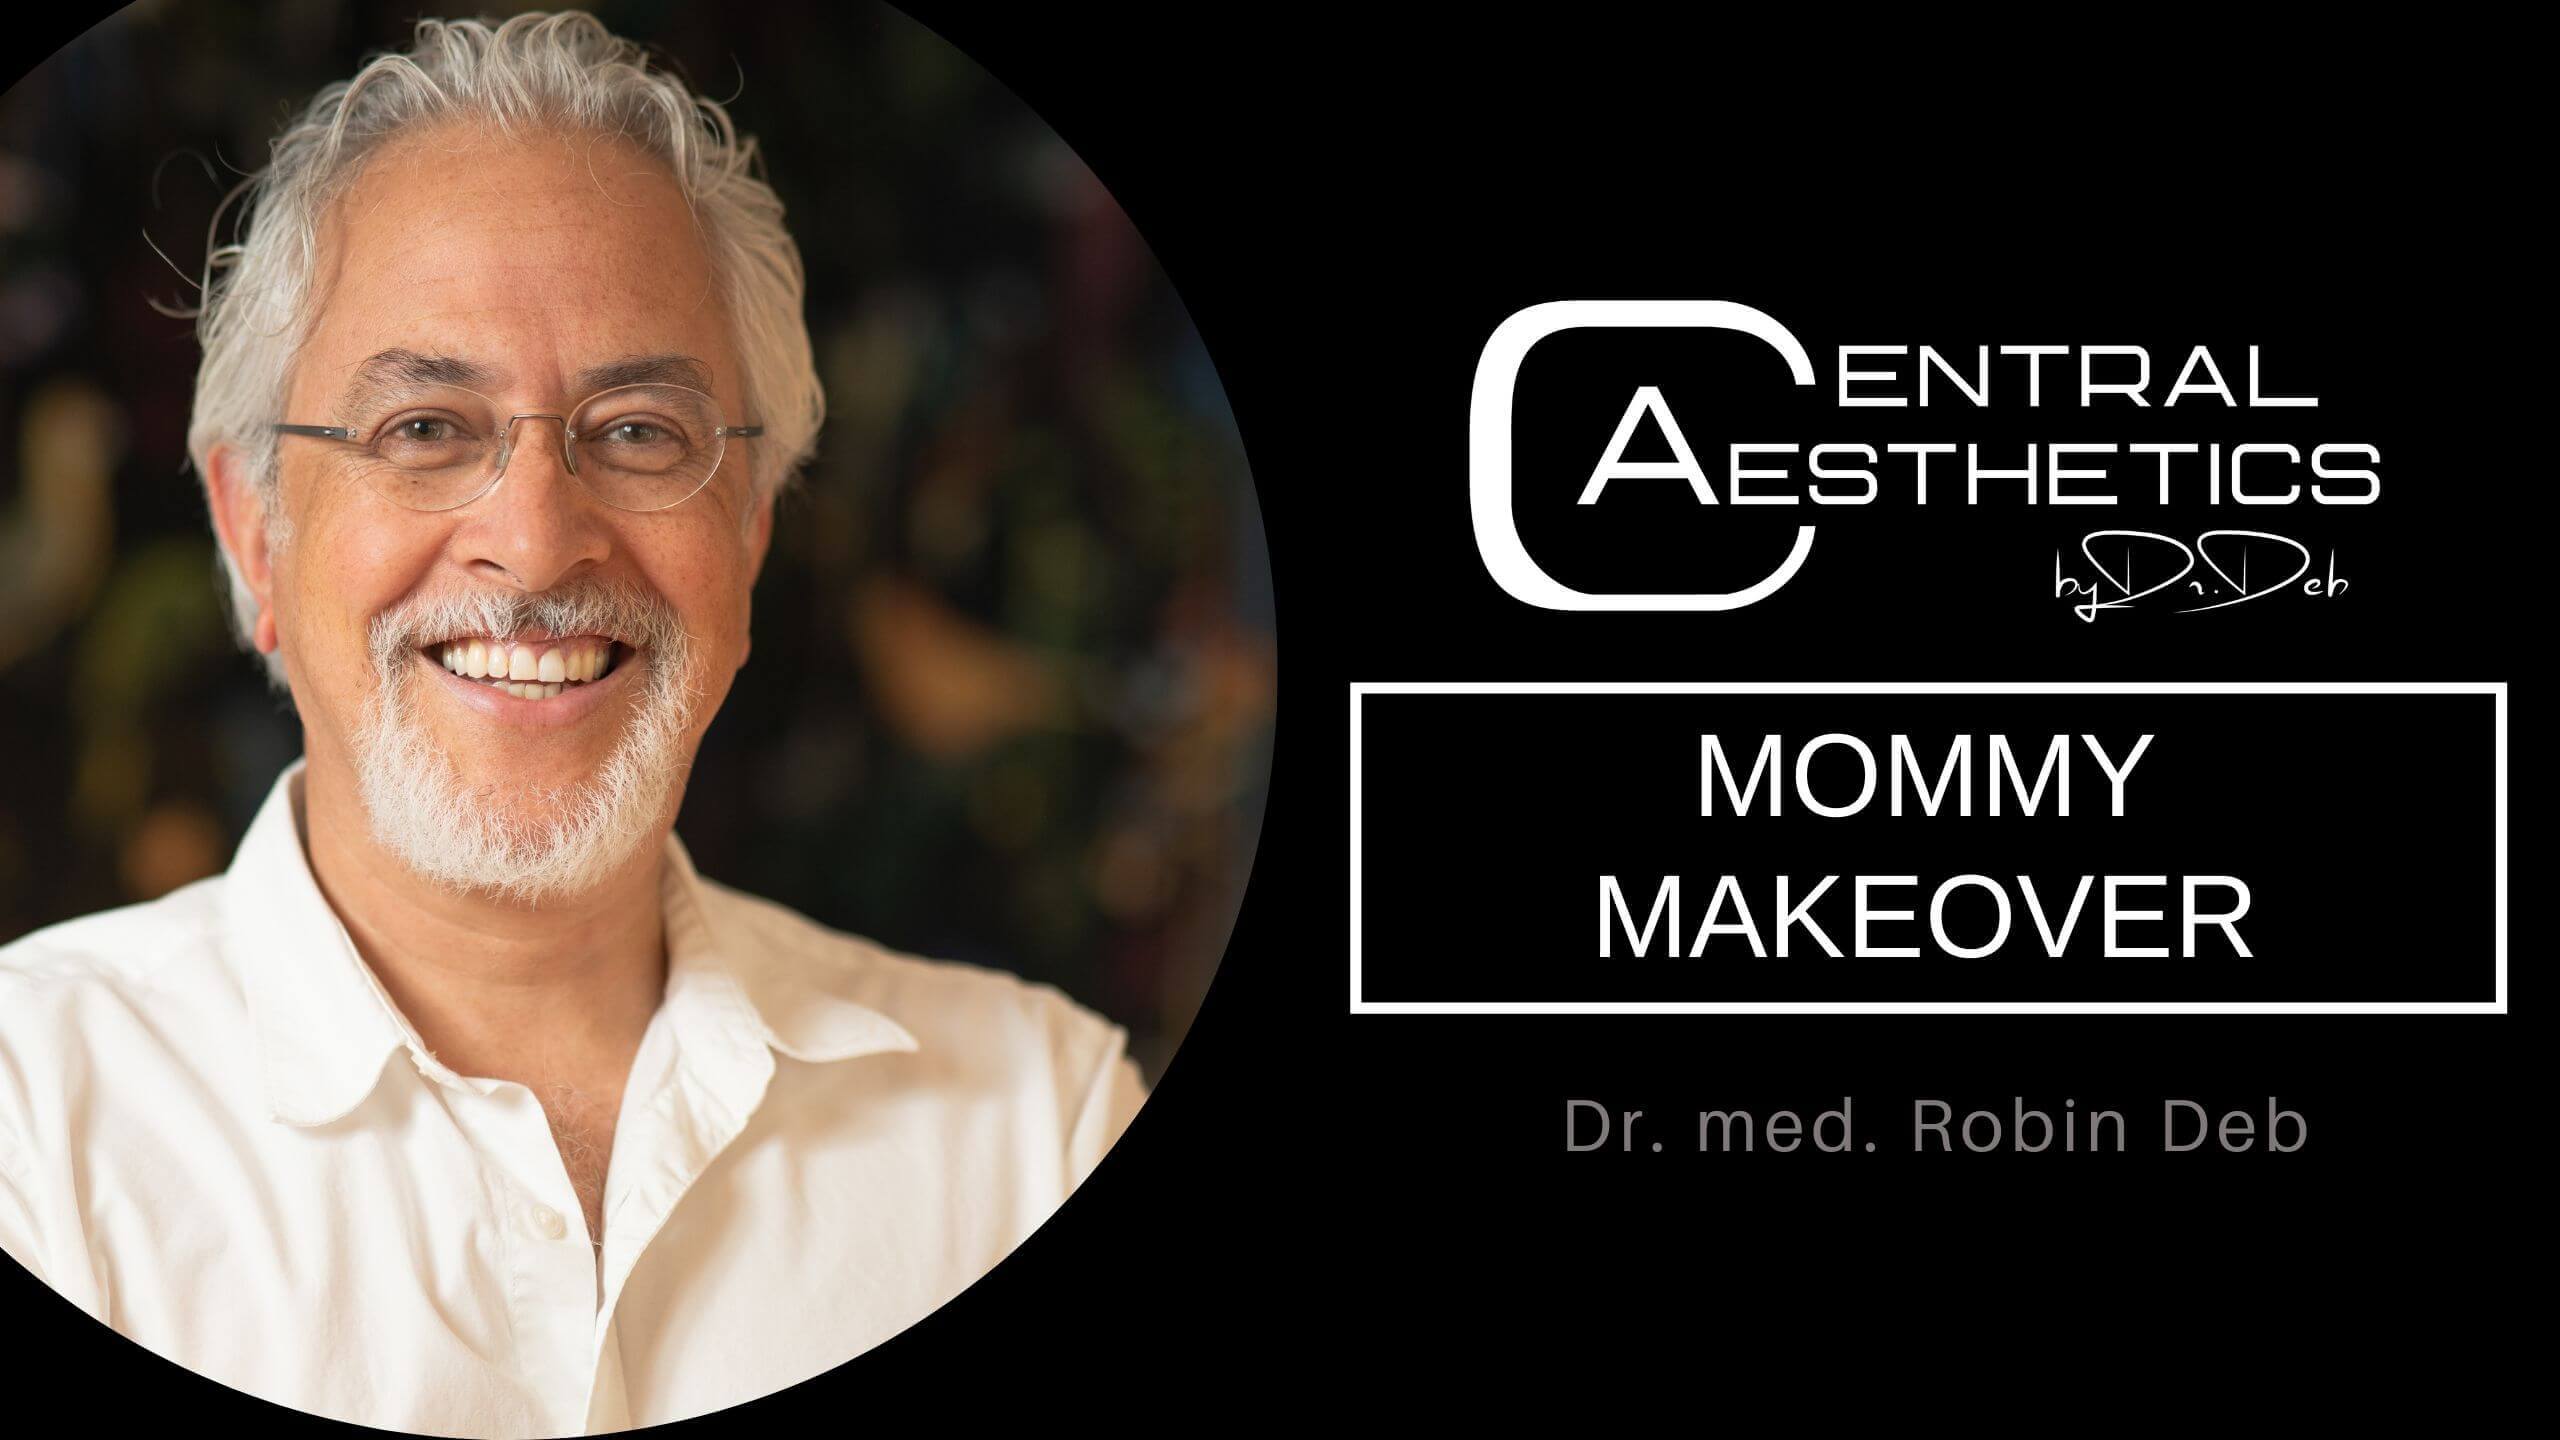 Video Mommy Makeover, Dr. Deb, Central Aesthetics, Plastische Chirurgie Frankfurt